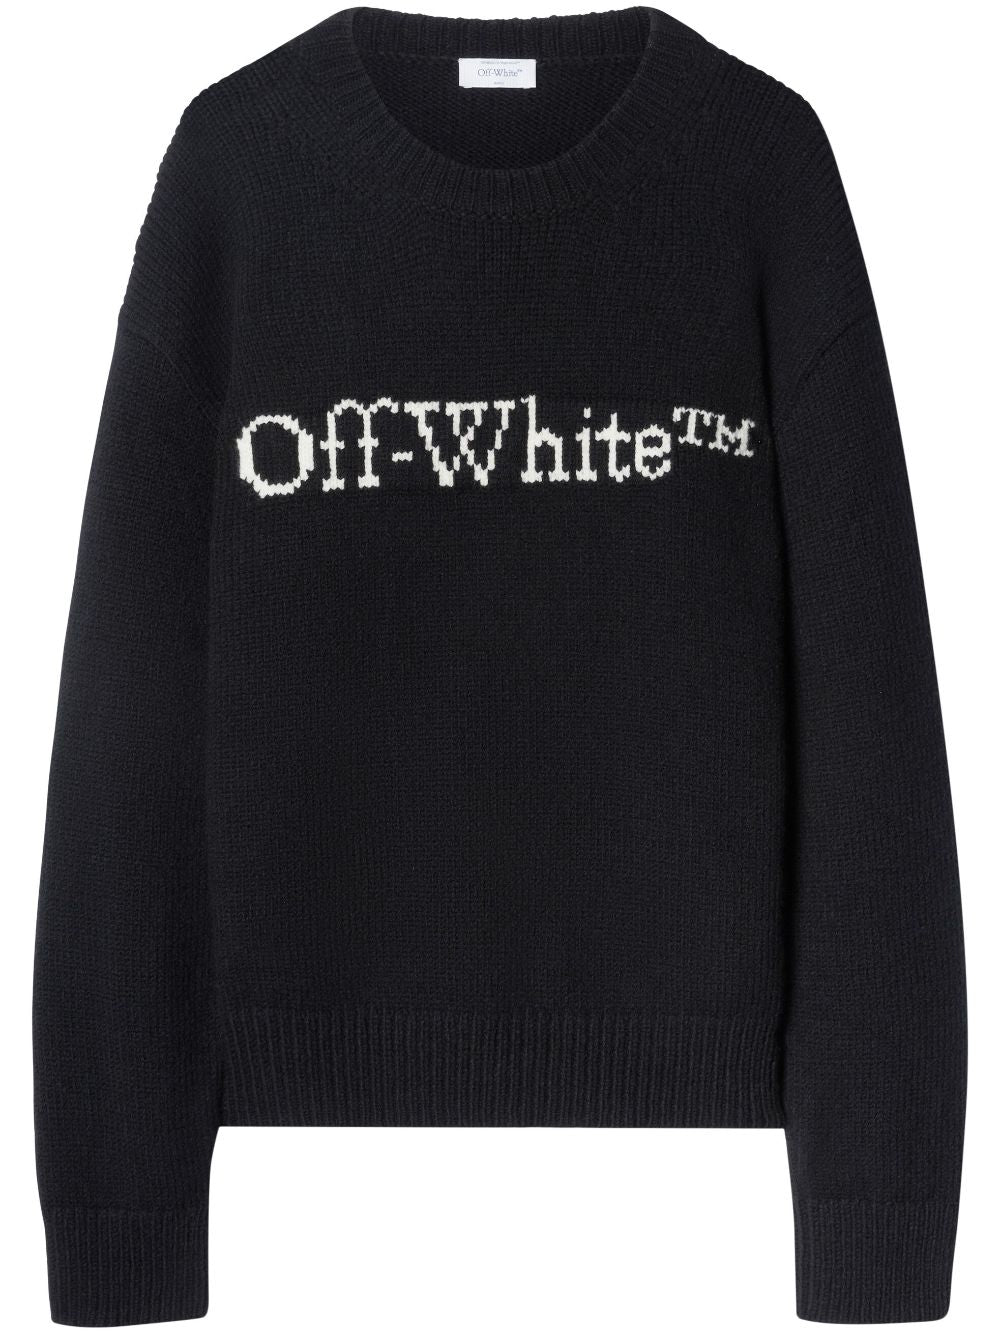 Image of OFF-WHITE MEN Big Bookish Chunky Knit Crewneck Sweatshirt Black/White